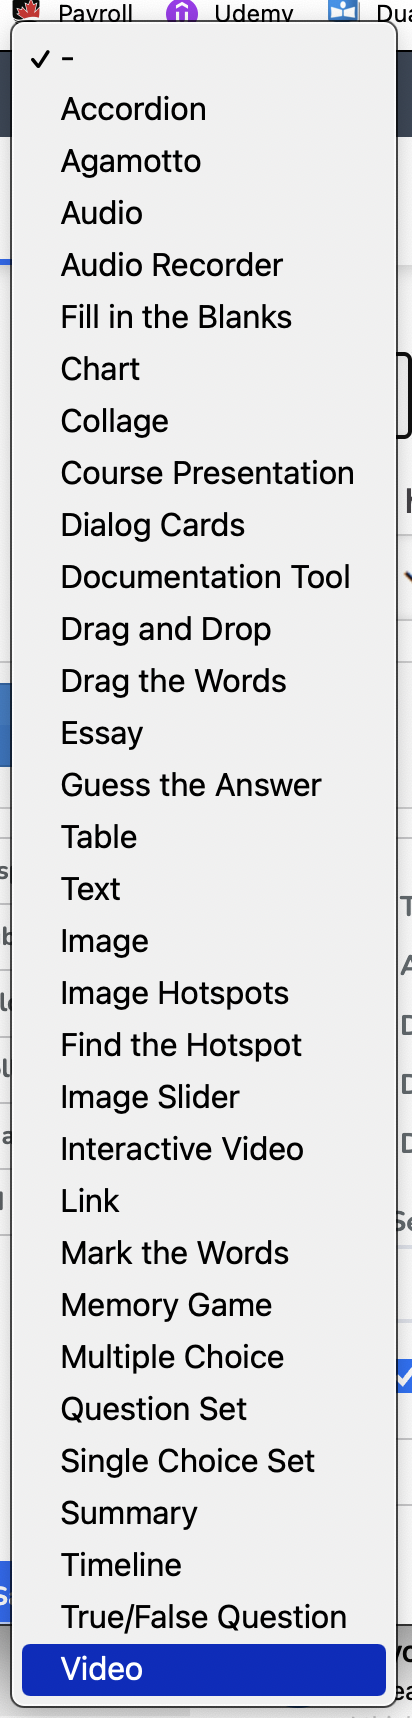 screenshot of list of activity types in column (default not alphabetic)